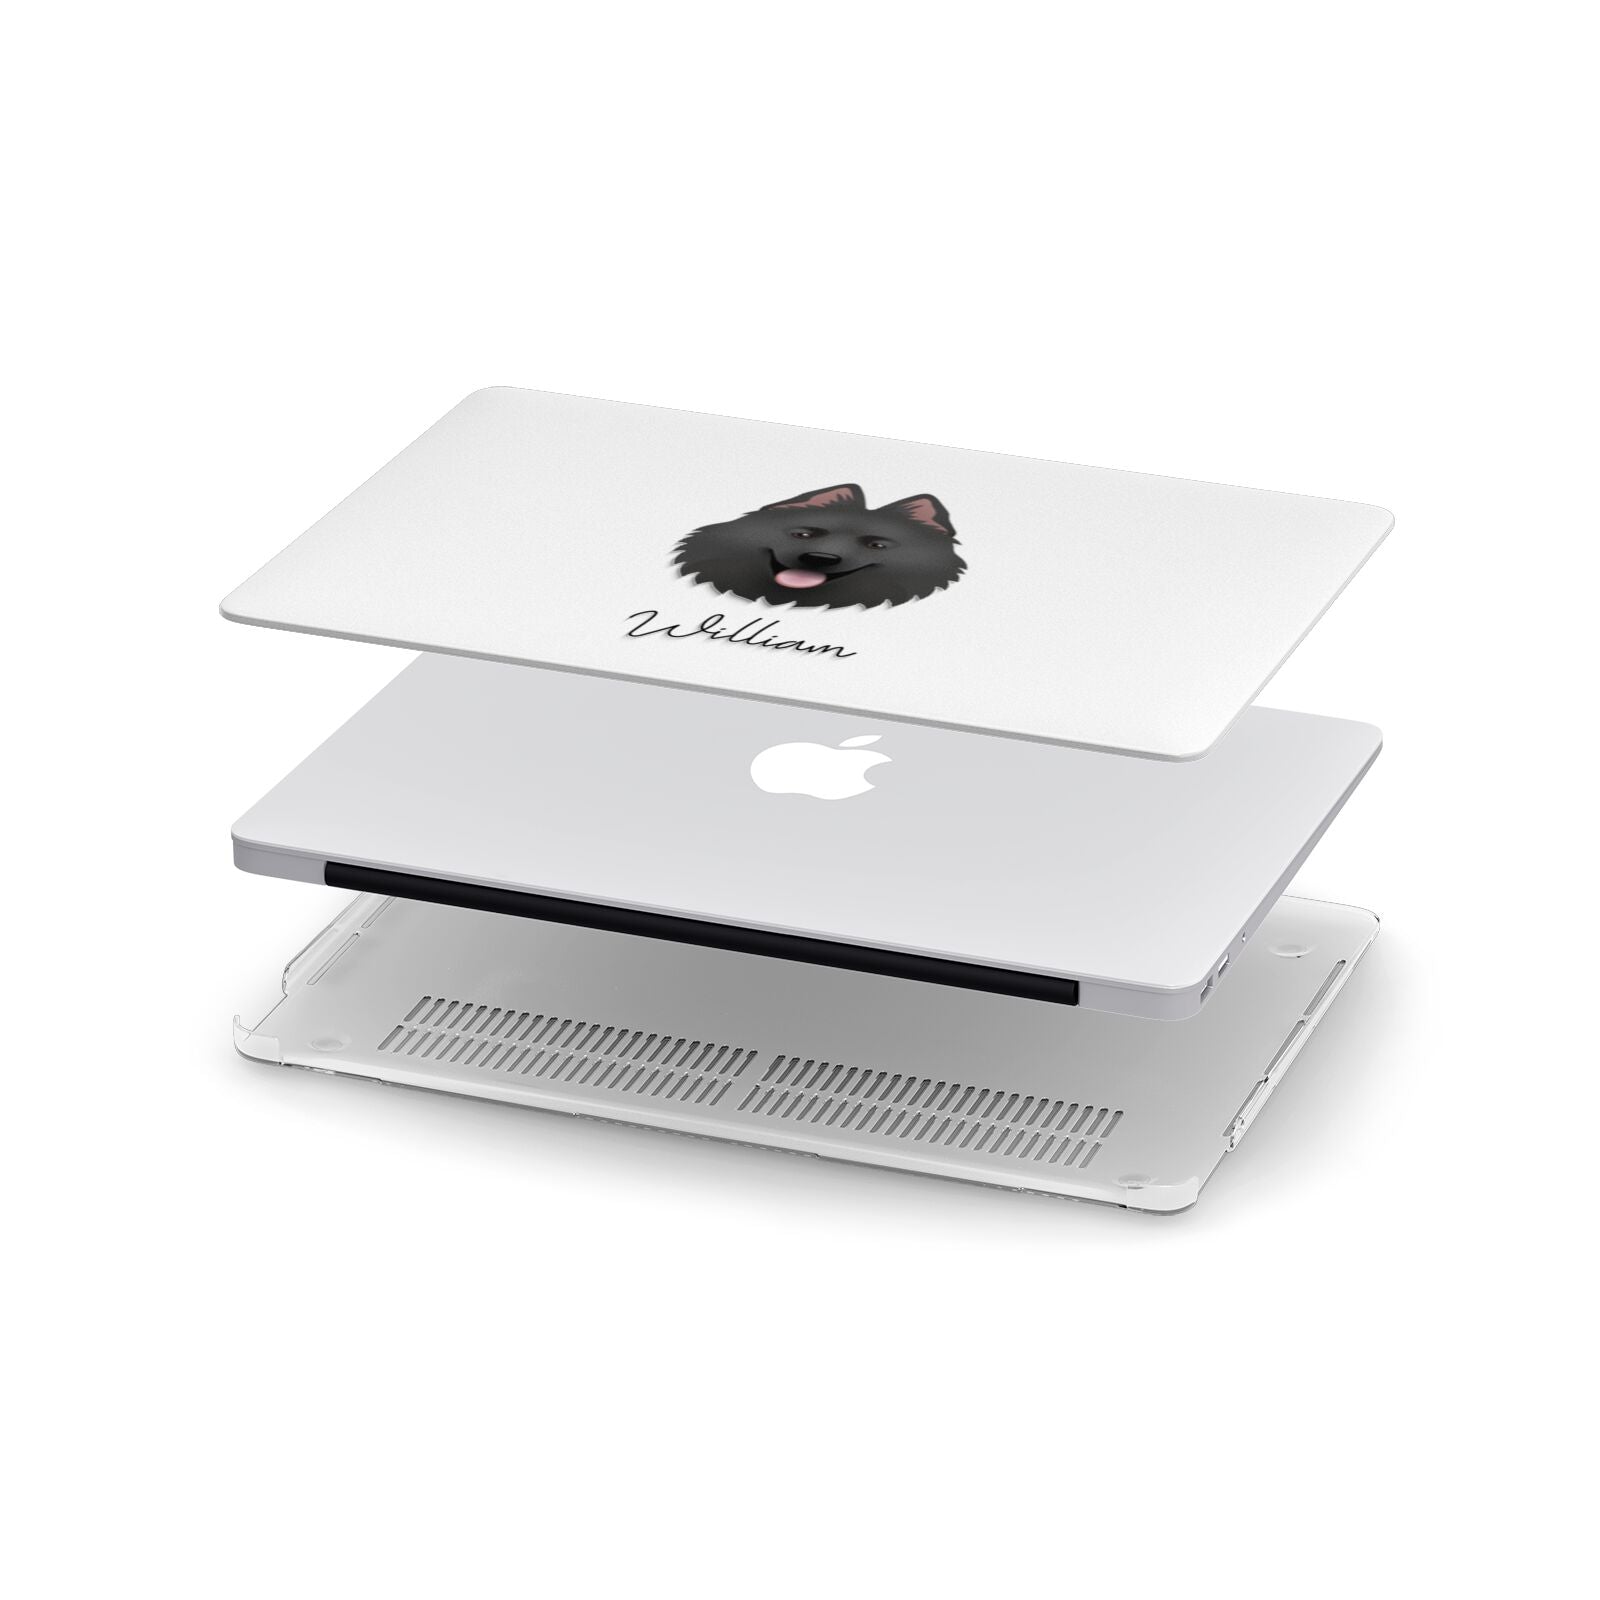 Samoyed Personalised Apple MacBook Case in Detail